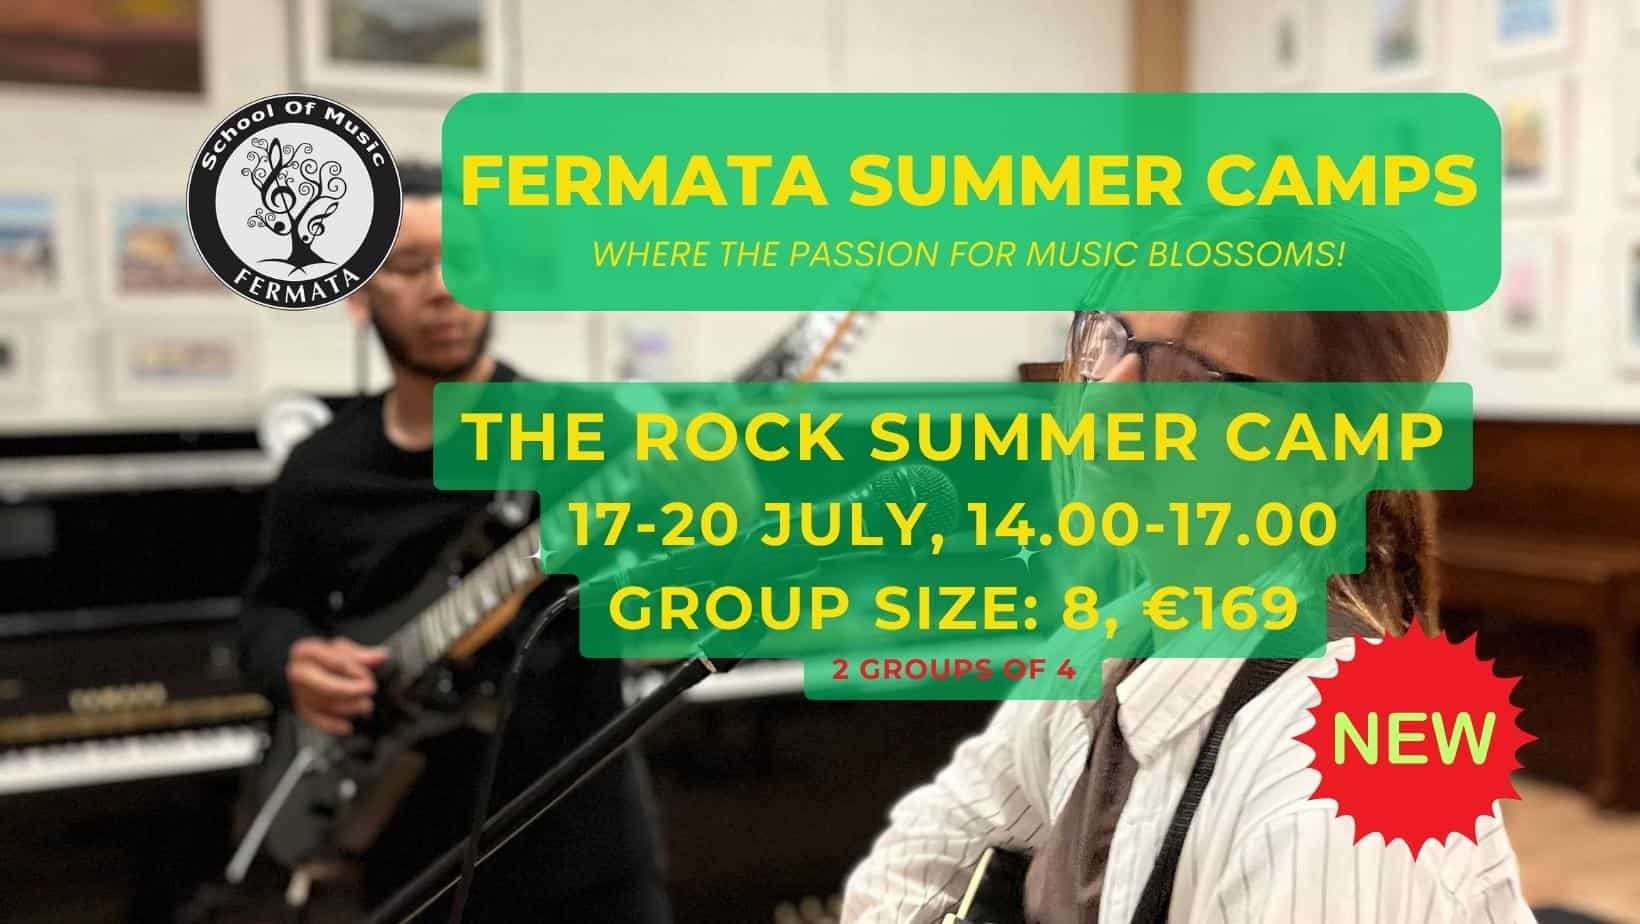 Fermata Rock Summer Camp: "Let's Jam!"